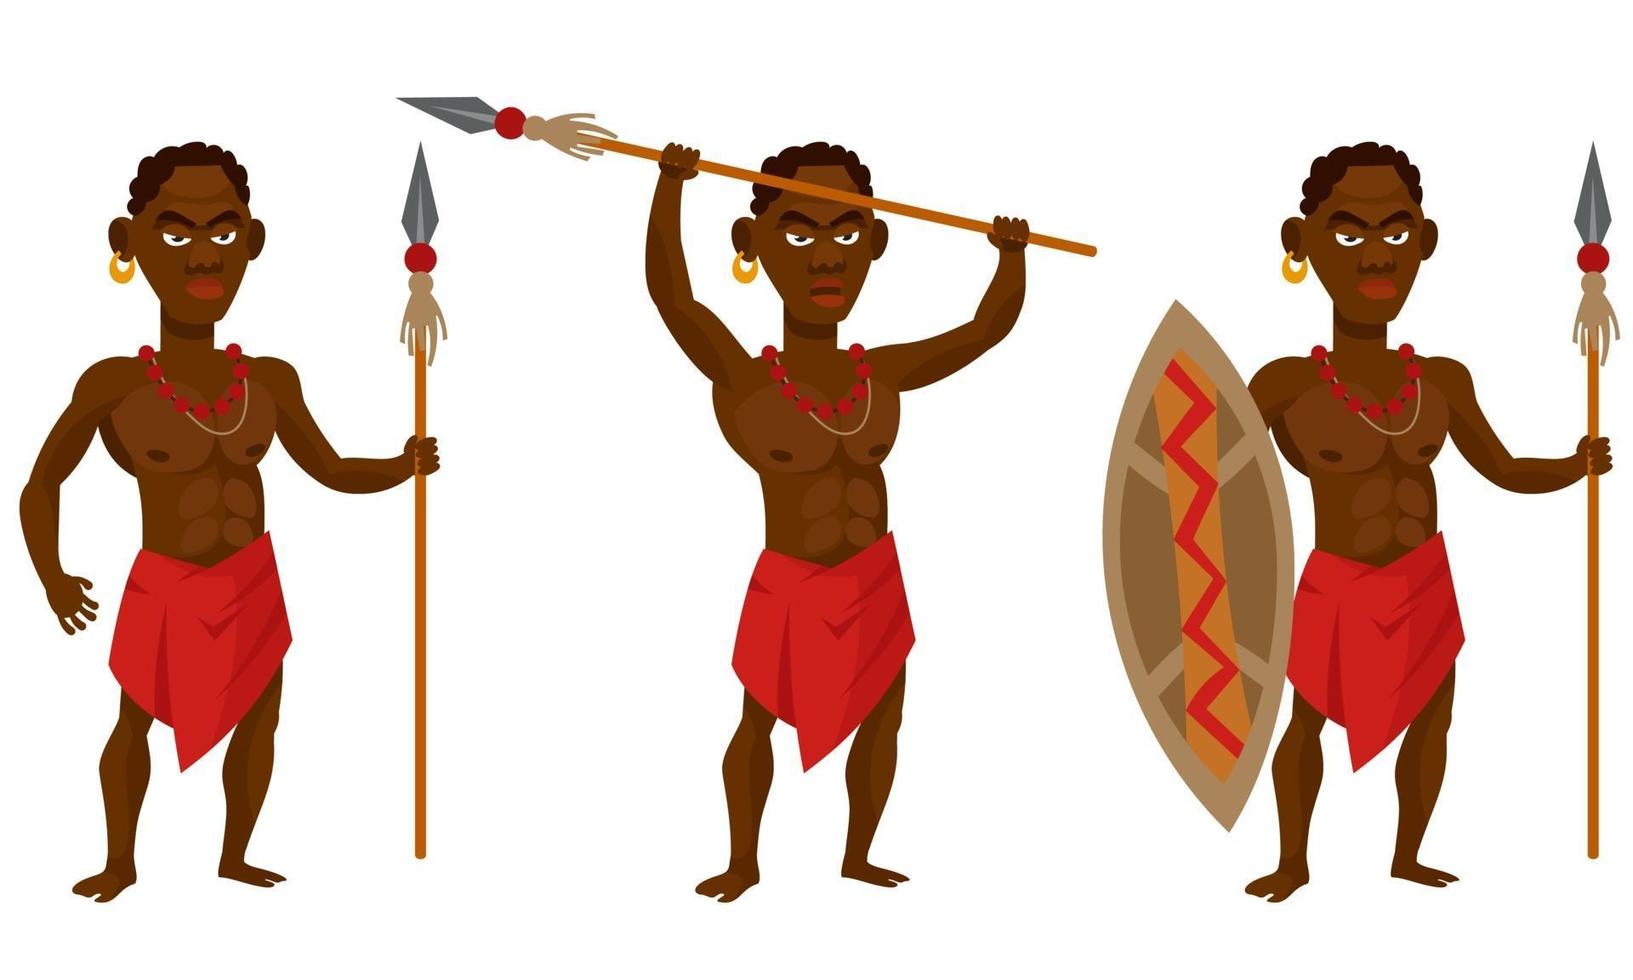 afrikansk stamkrigare i olika poser. vektor